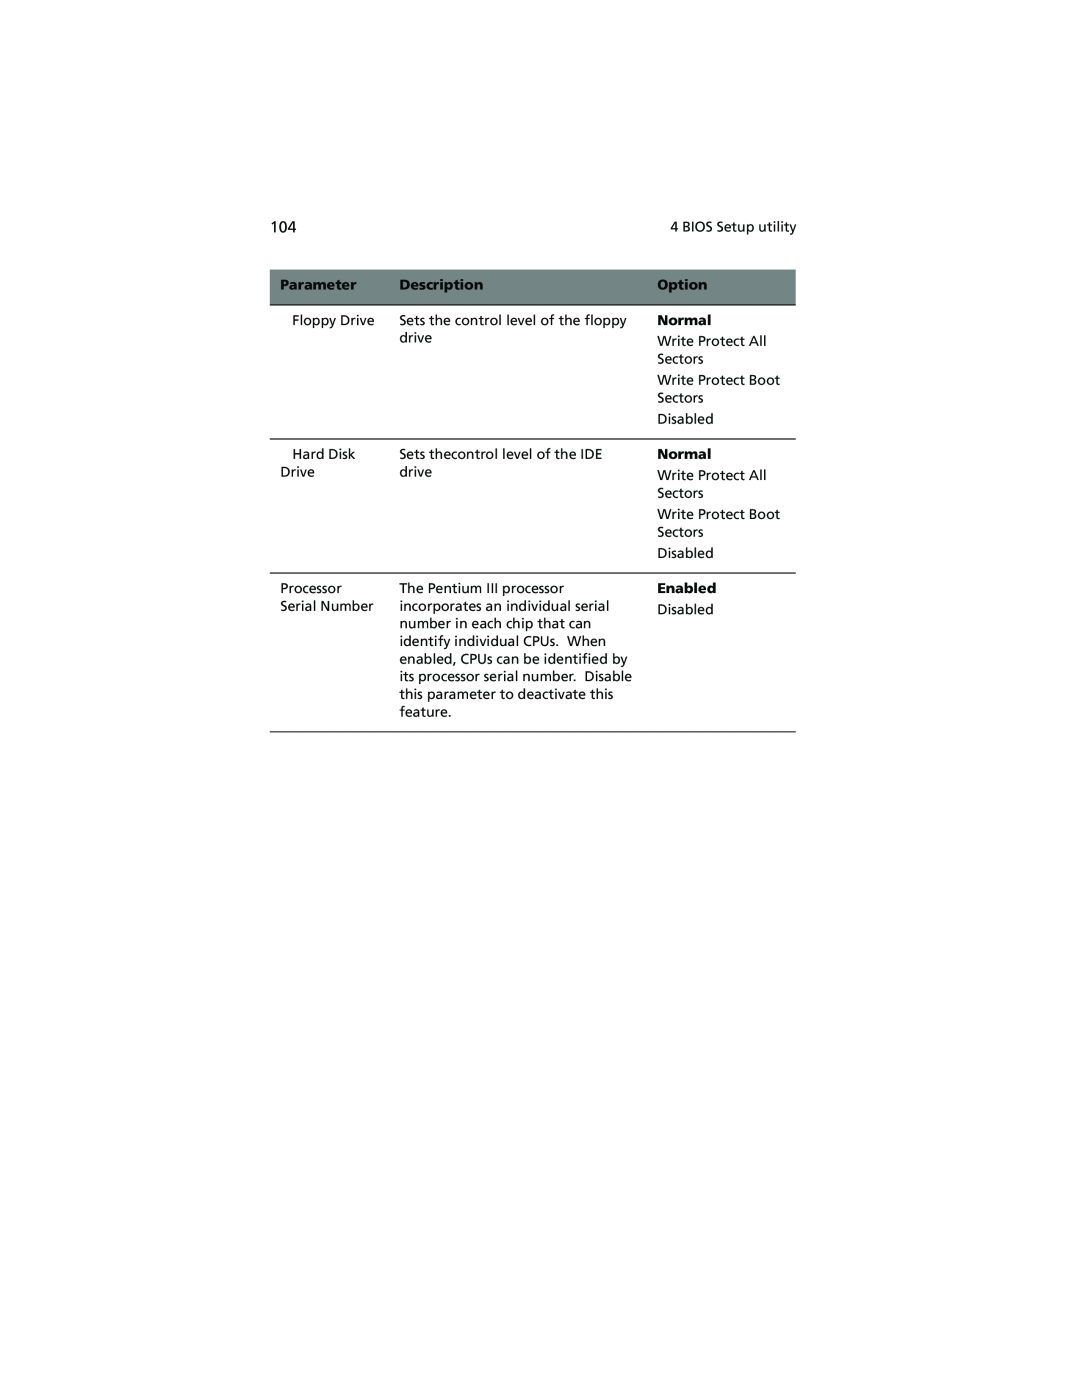 Acer Altos G610 manual Parameter, Description, Option, Normal, Enabled 